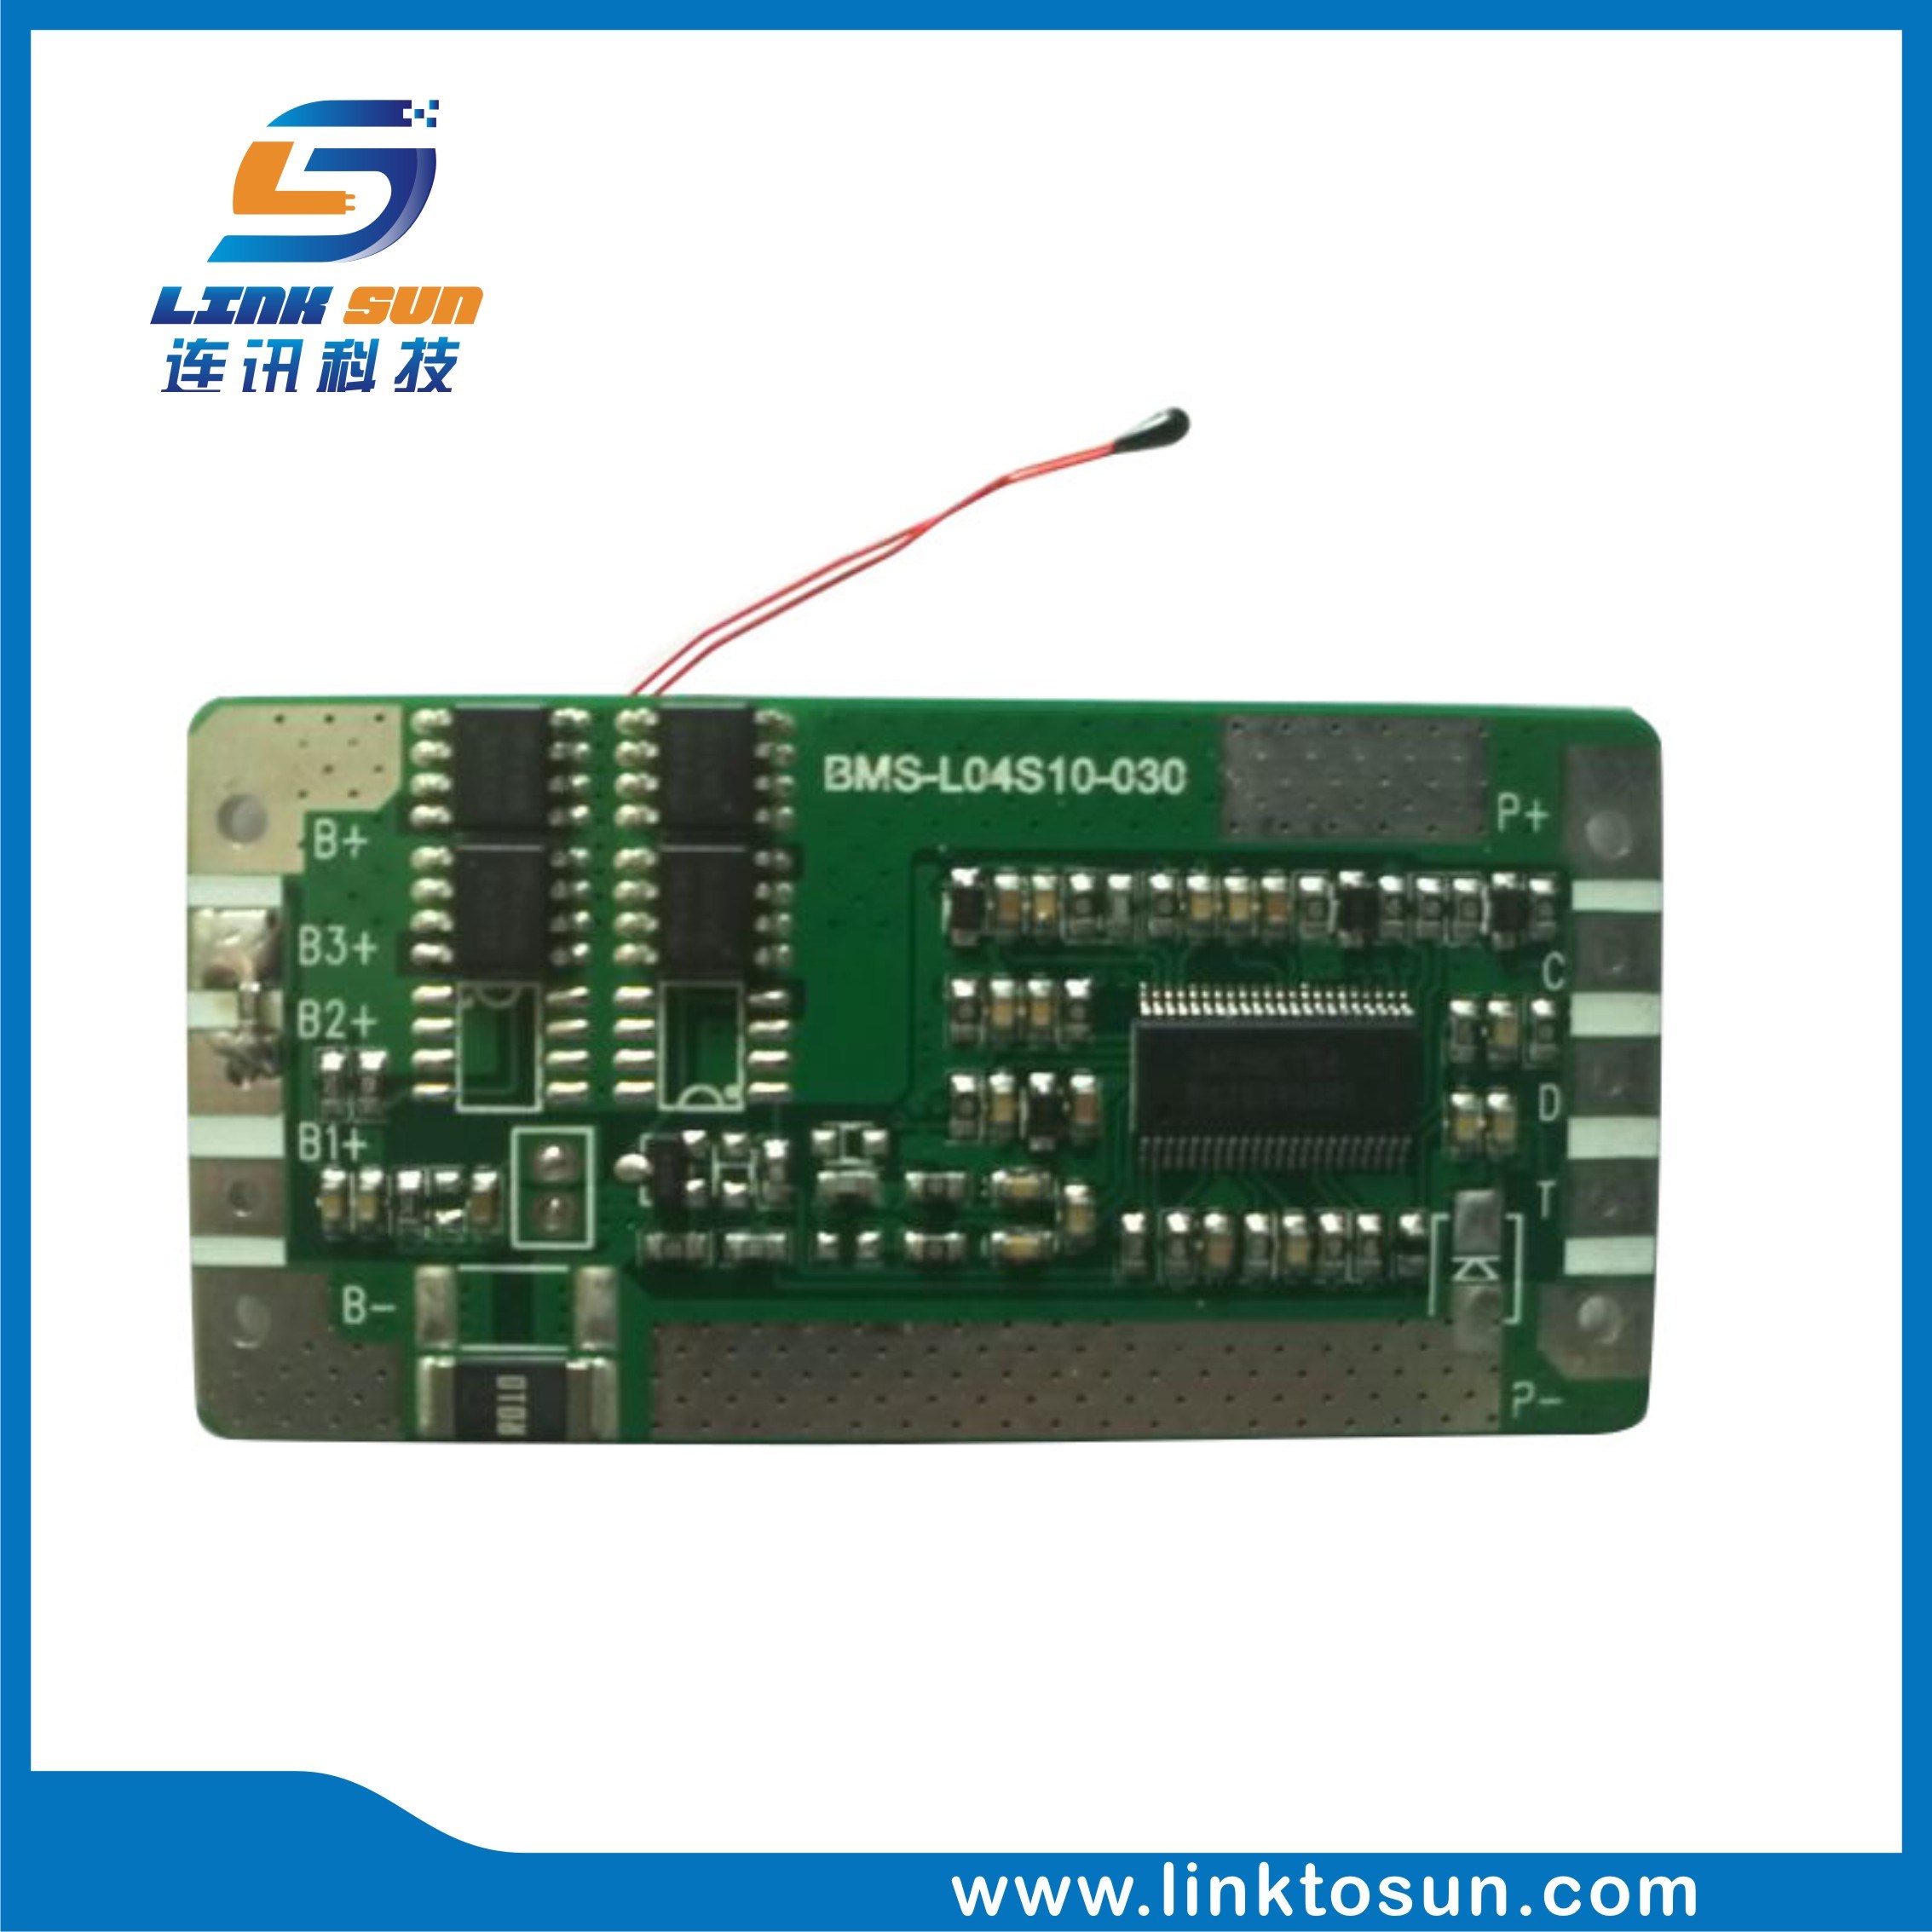 2-4s Bq20z95 Bq78350 10A BMS Protect Circuit Board with Smbus Communication